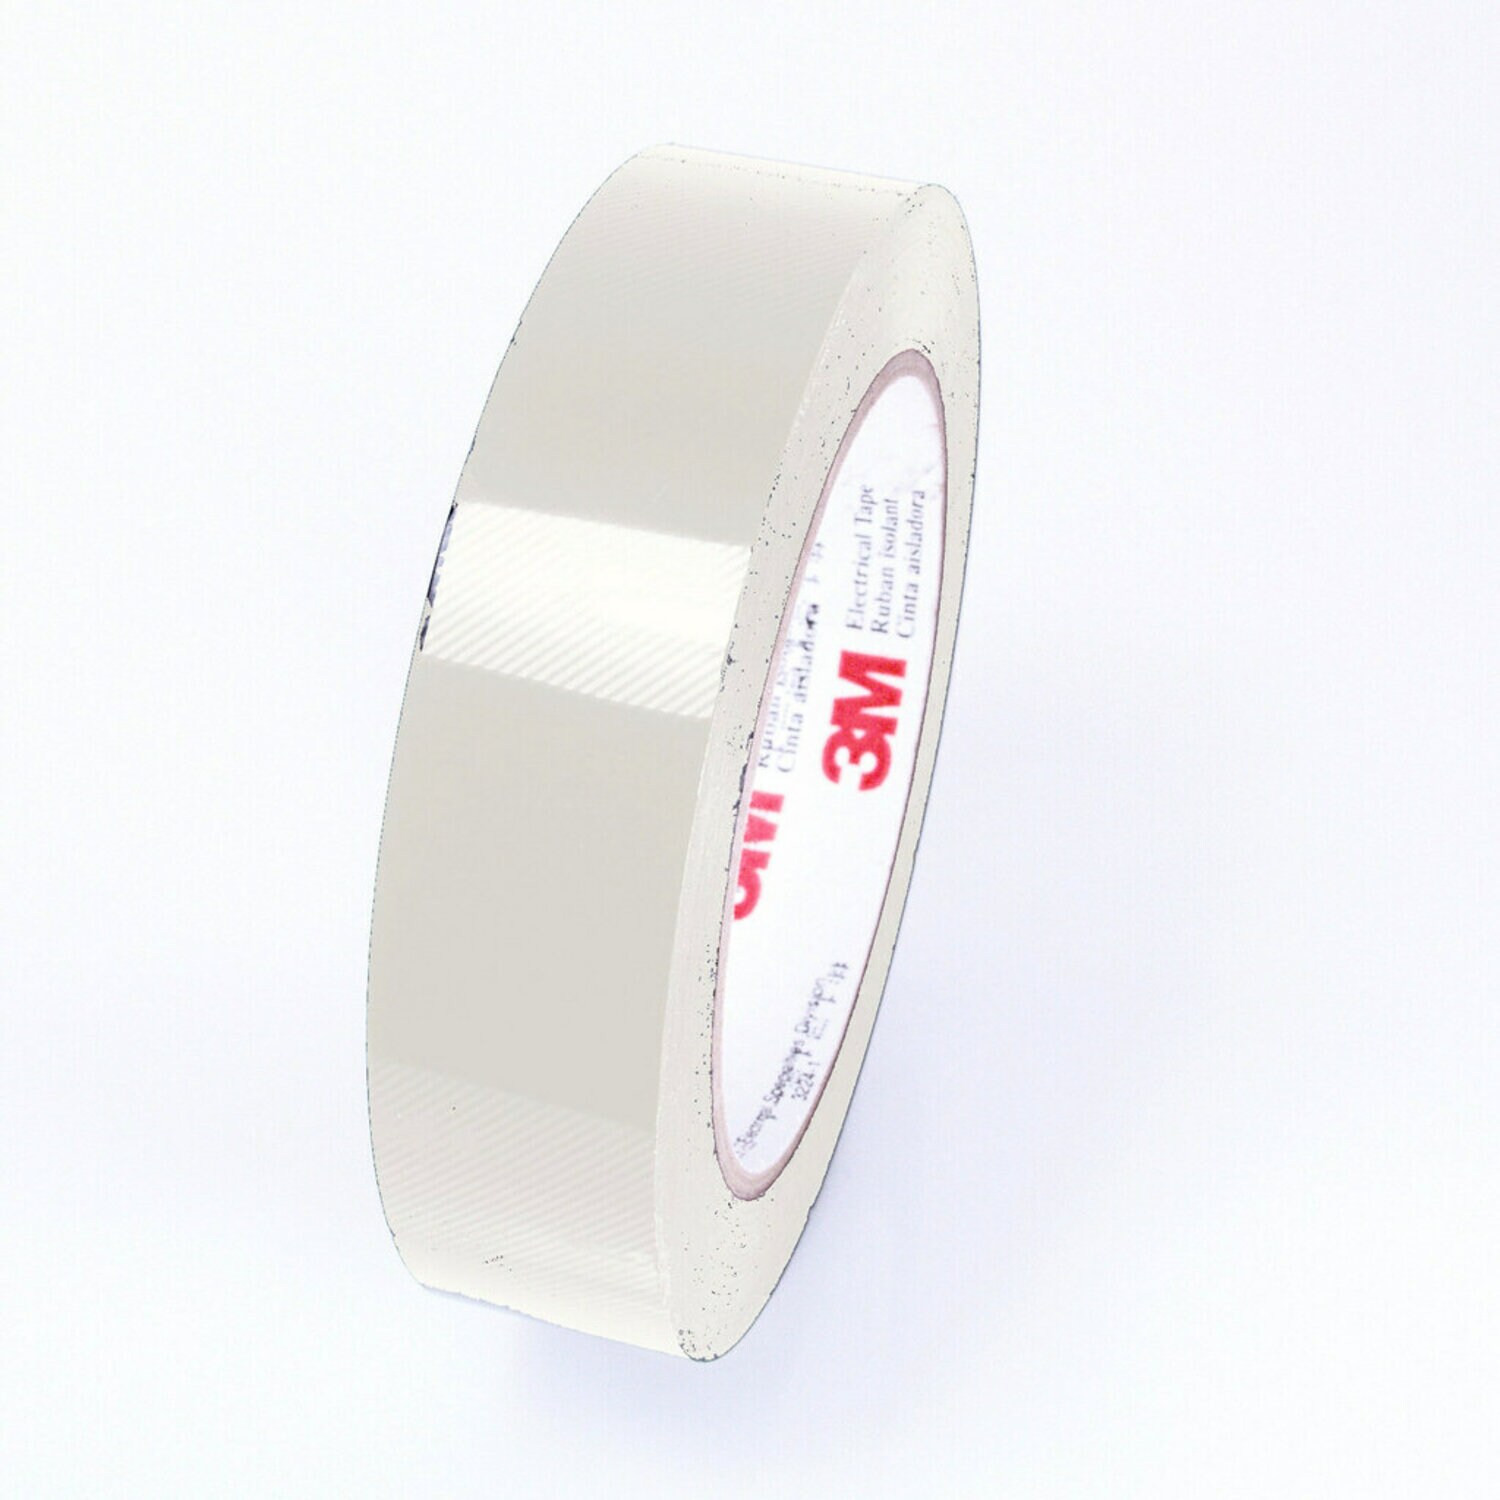 7100134567 - 3M Polyester Film Electrical Tape 5, 3/4-in x 72 yd, Bulk 3-in plastic
core, (Advance), 48 Rolls/Case